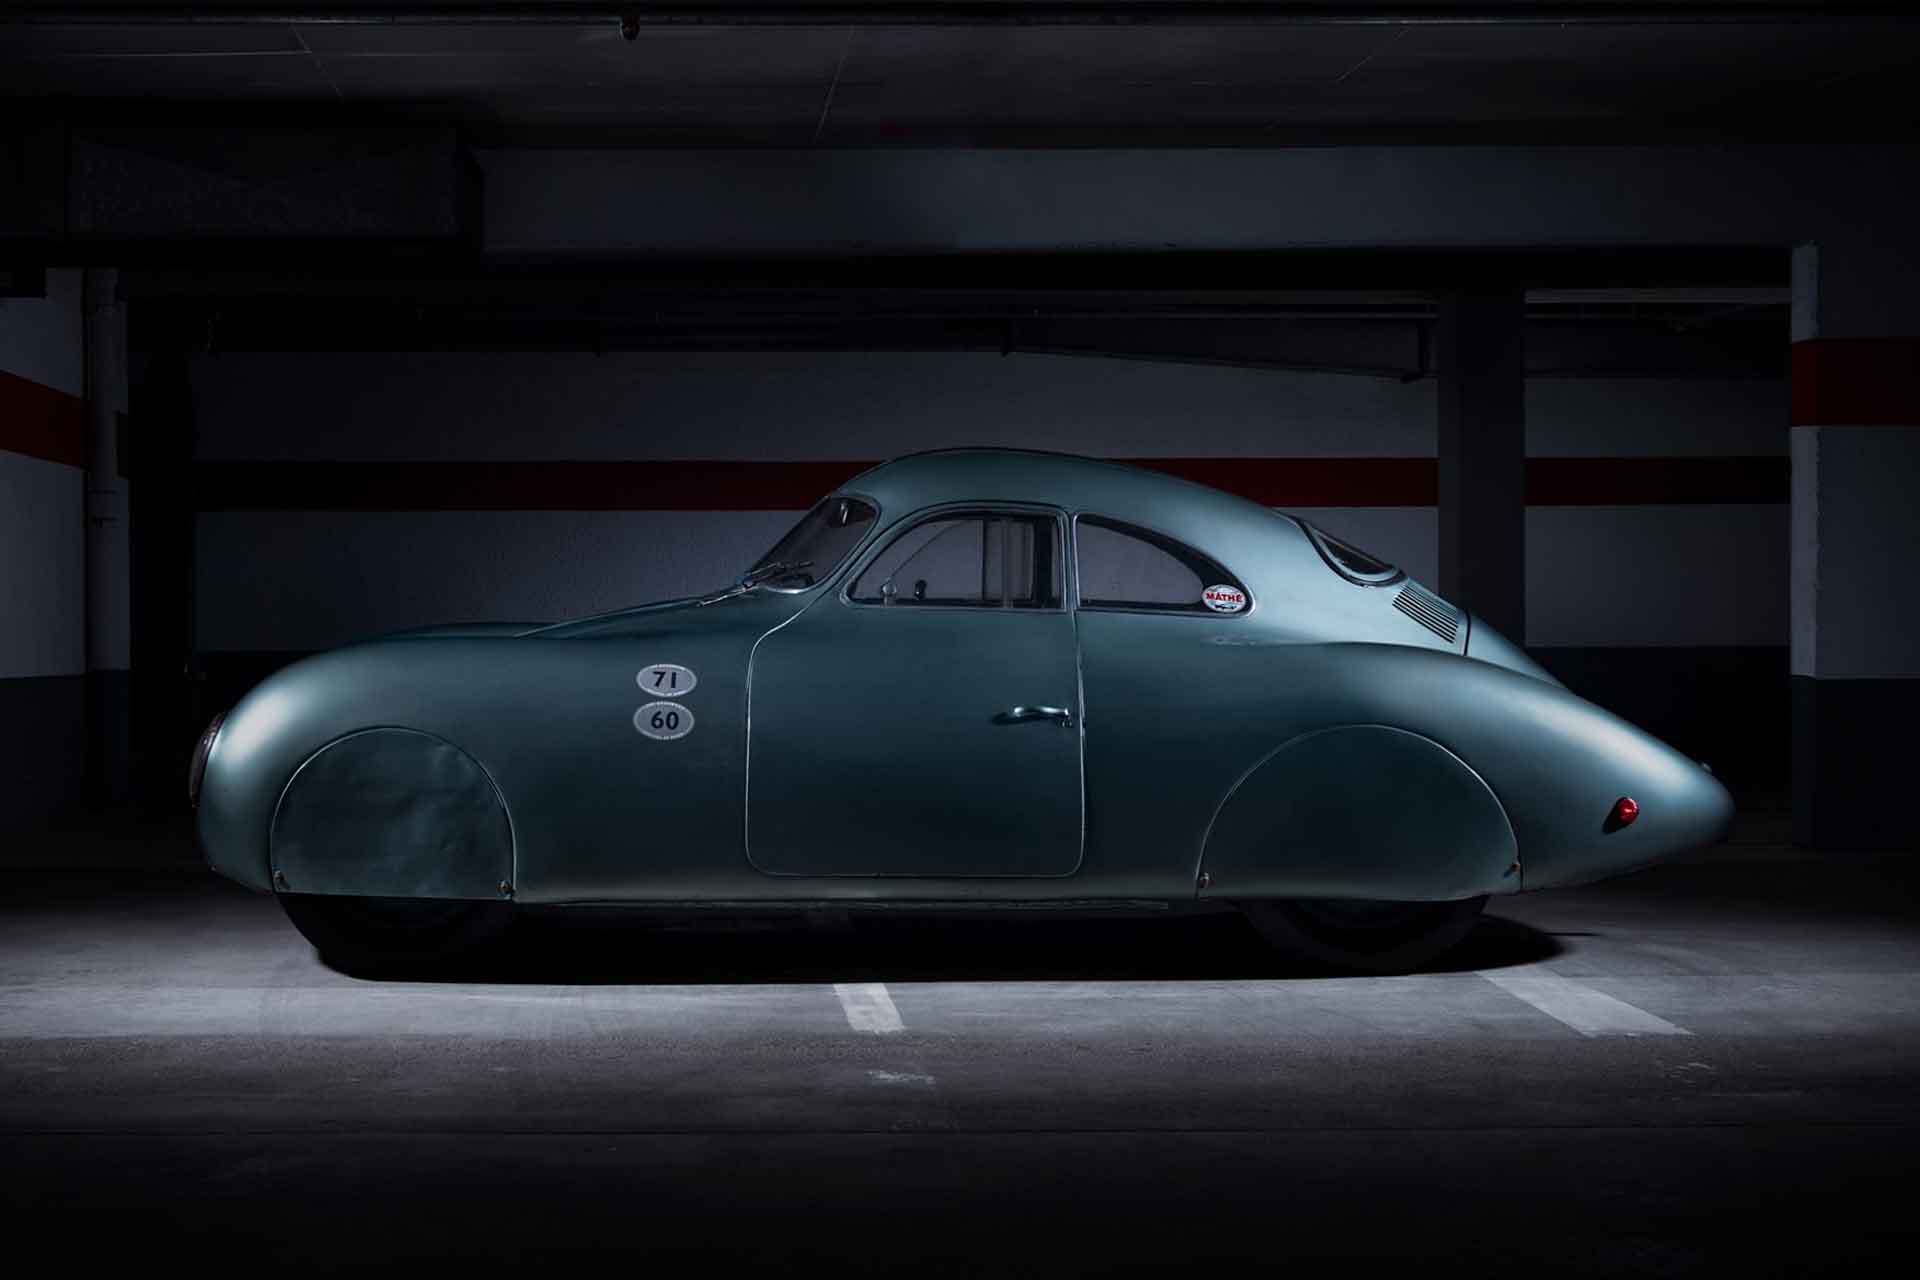 Porsche Type 64 RM Sotheby's veiling Pure Luxe